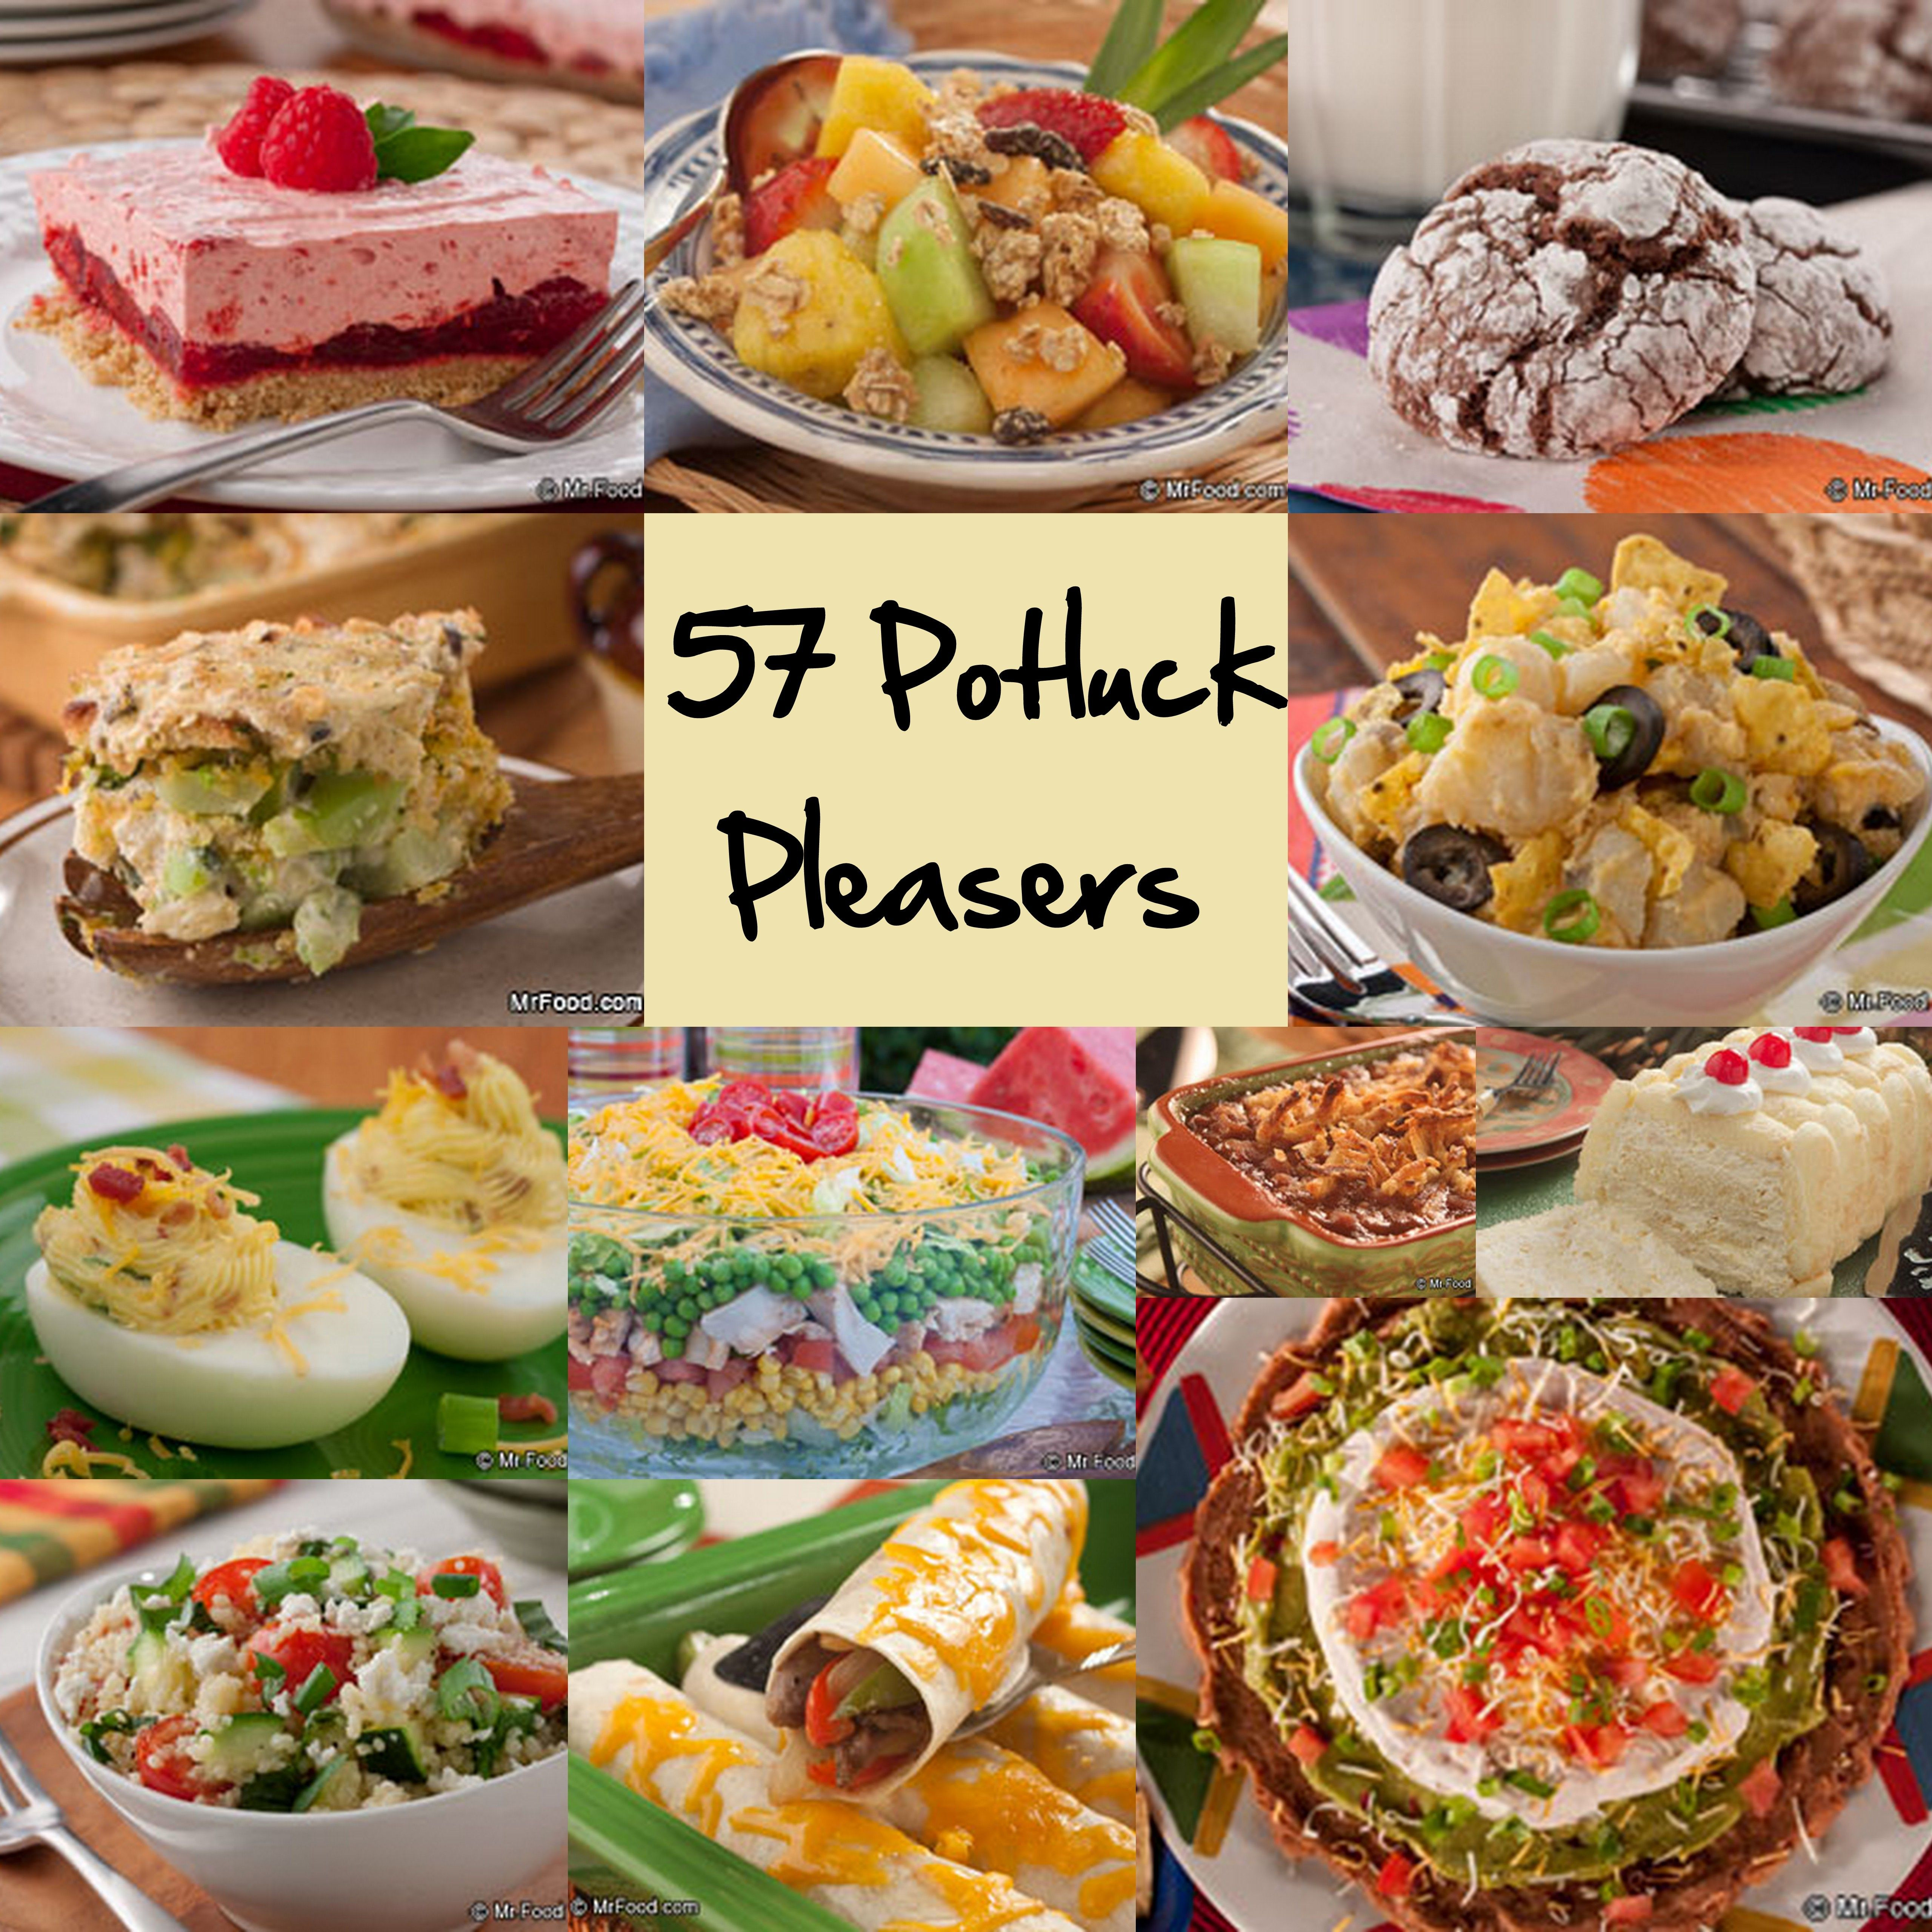 Office Party Food Ideas
 Easy Potluck Recipes 58 Potluck Ideas